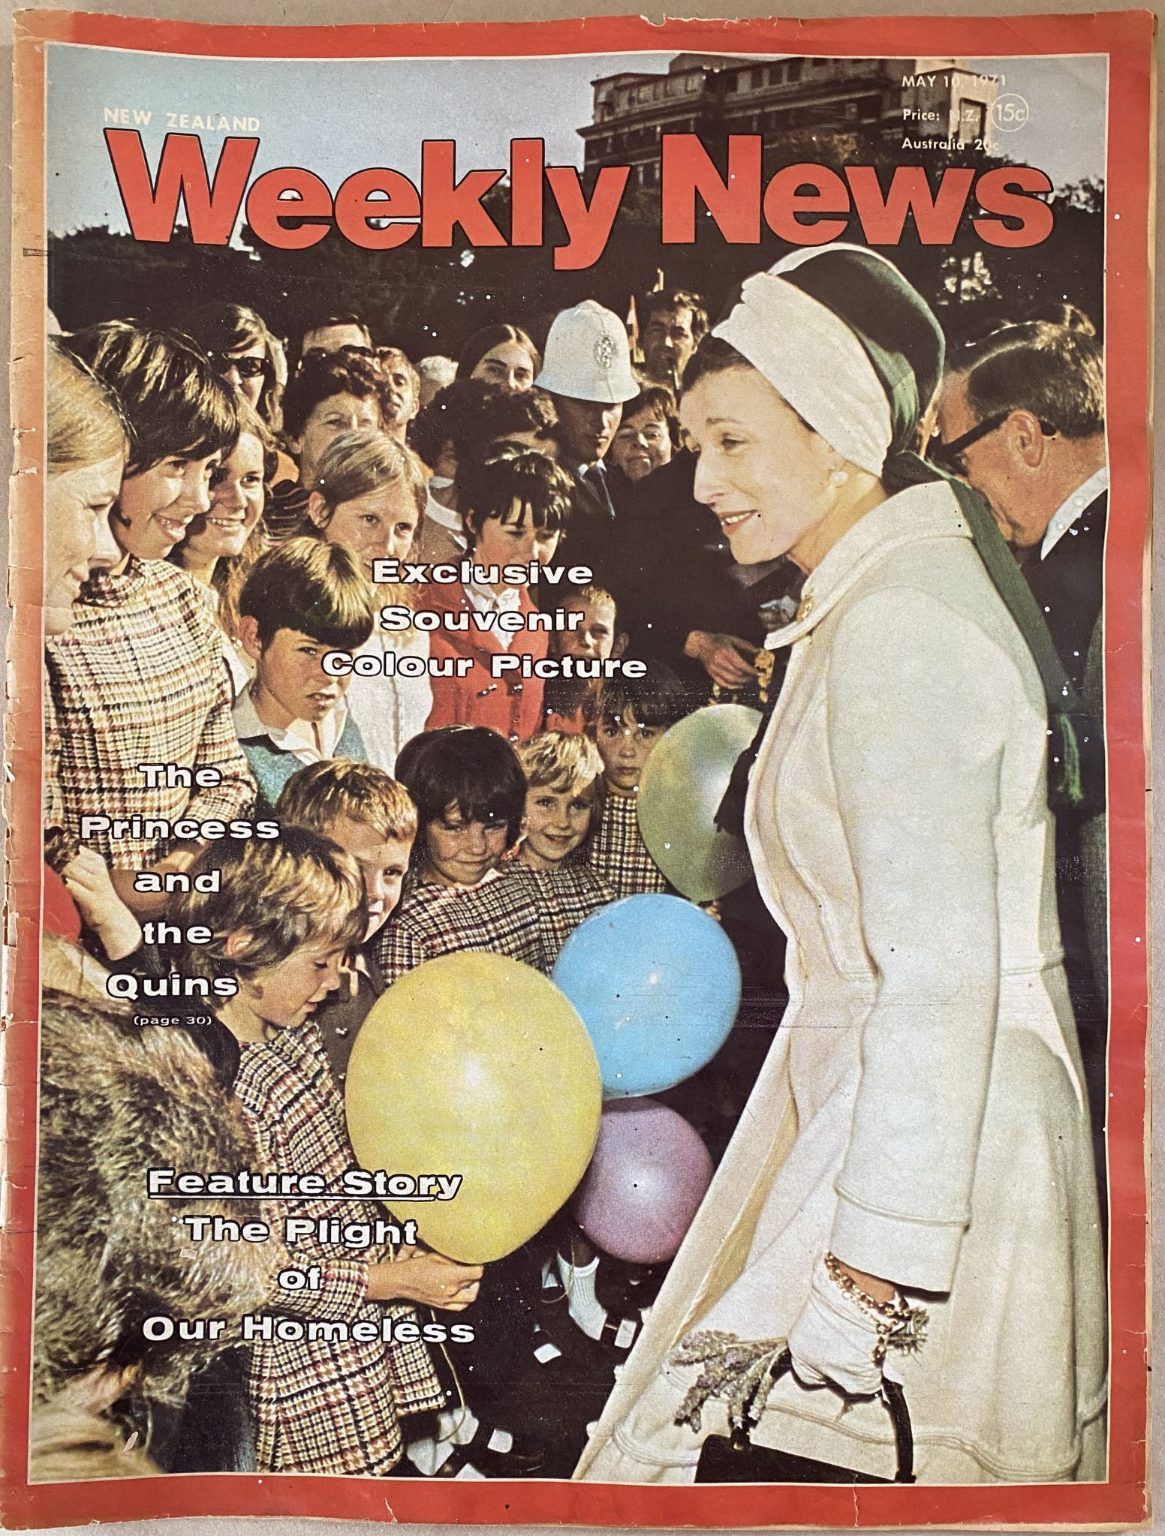 OLD NEWSPAPER: New Zealand Weekly News, No. 5605, 10 May 1971